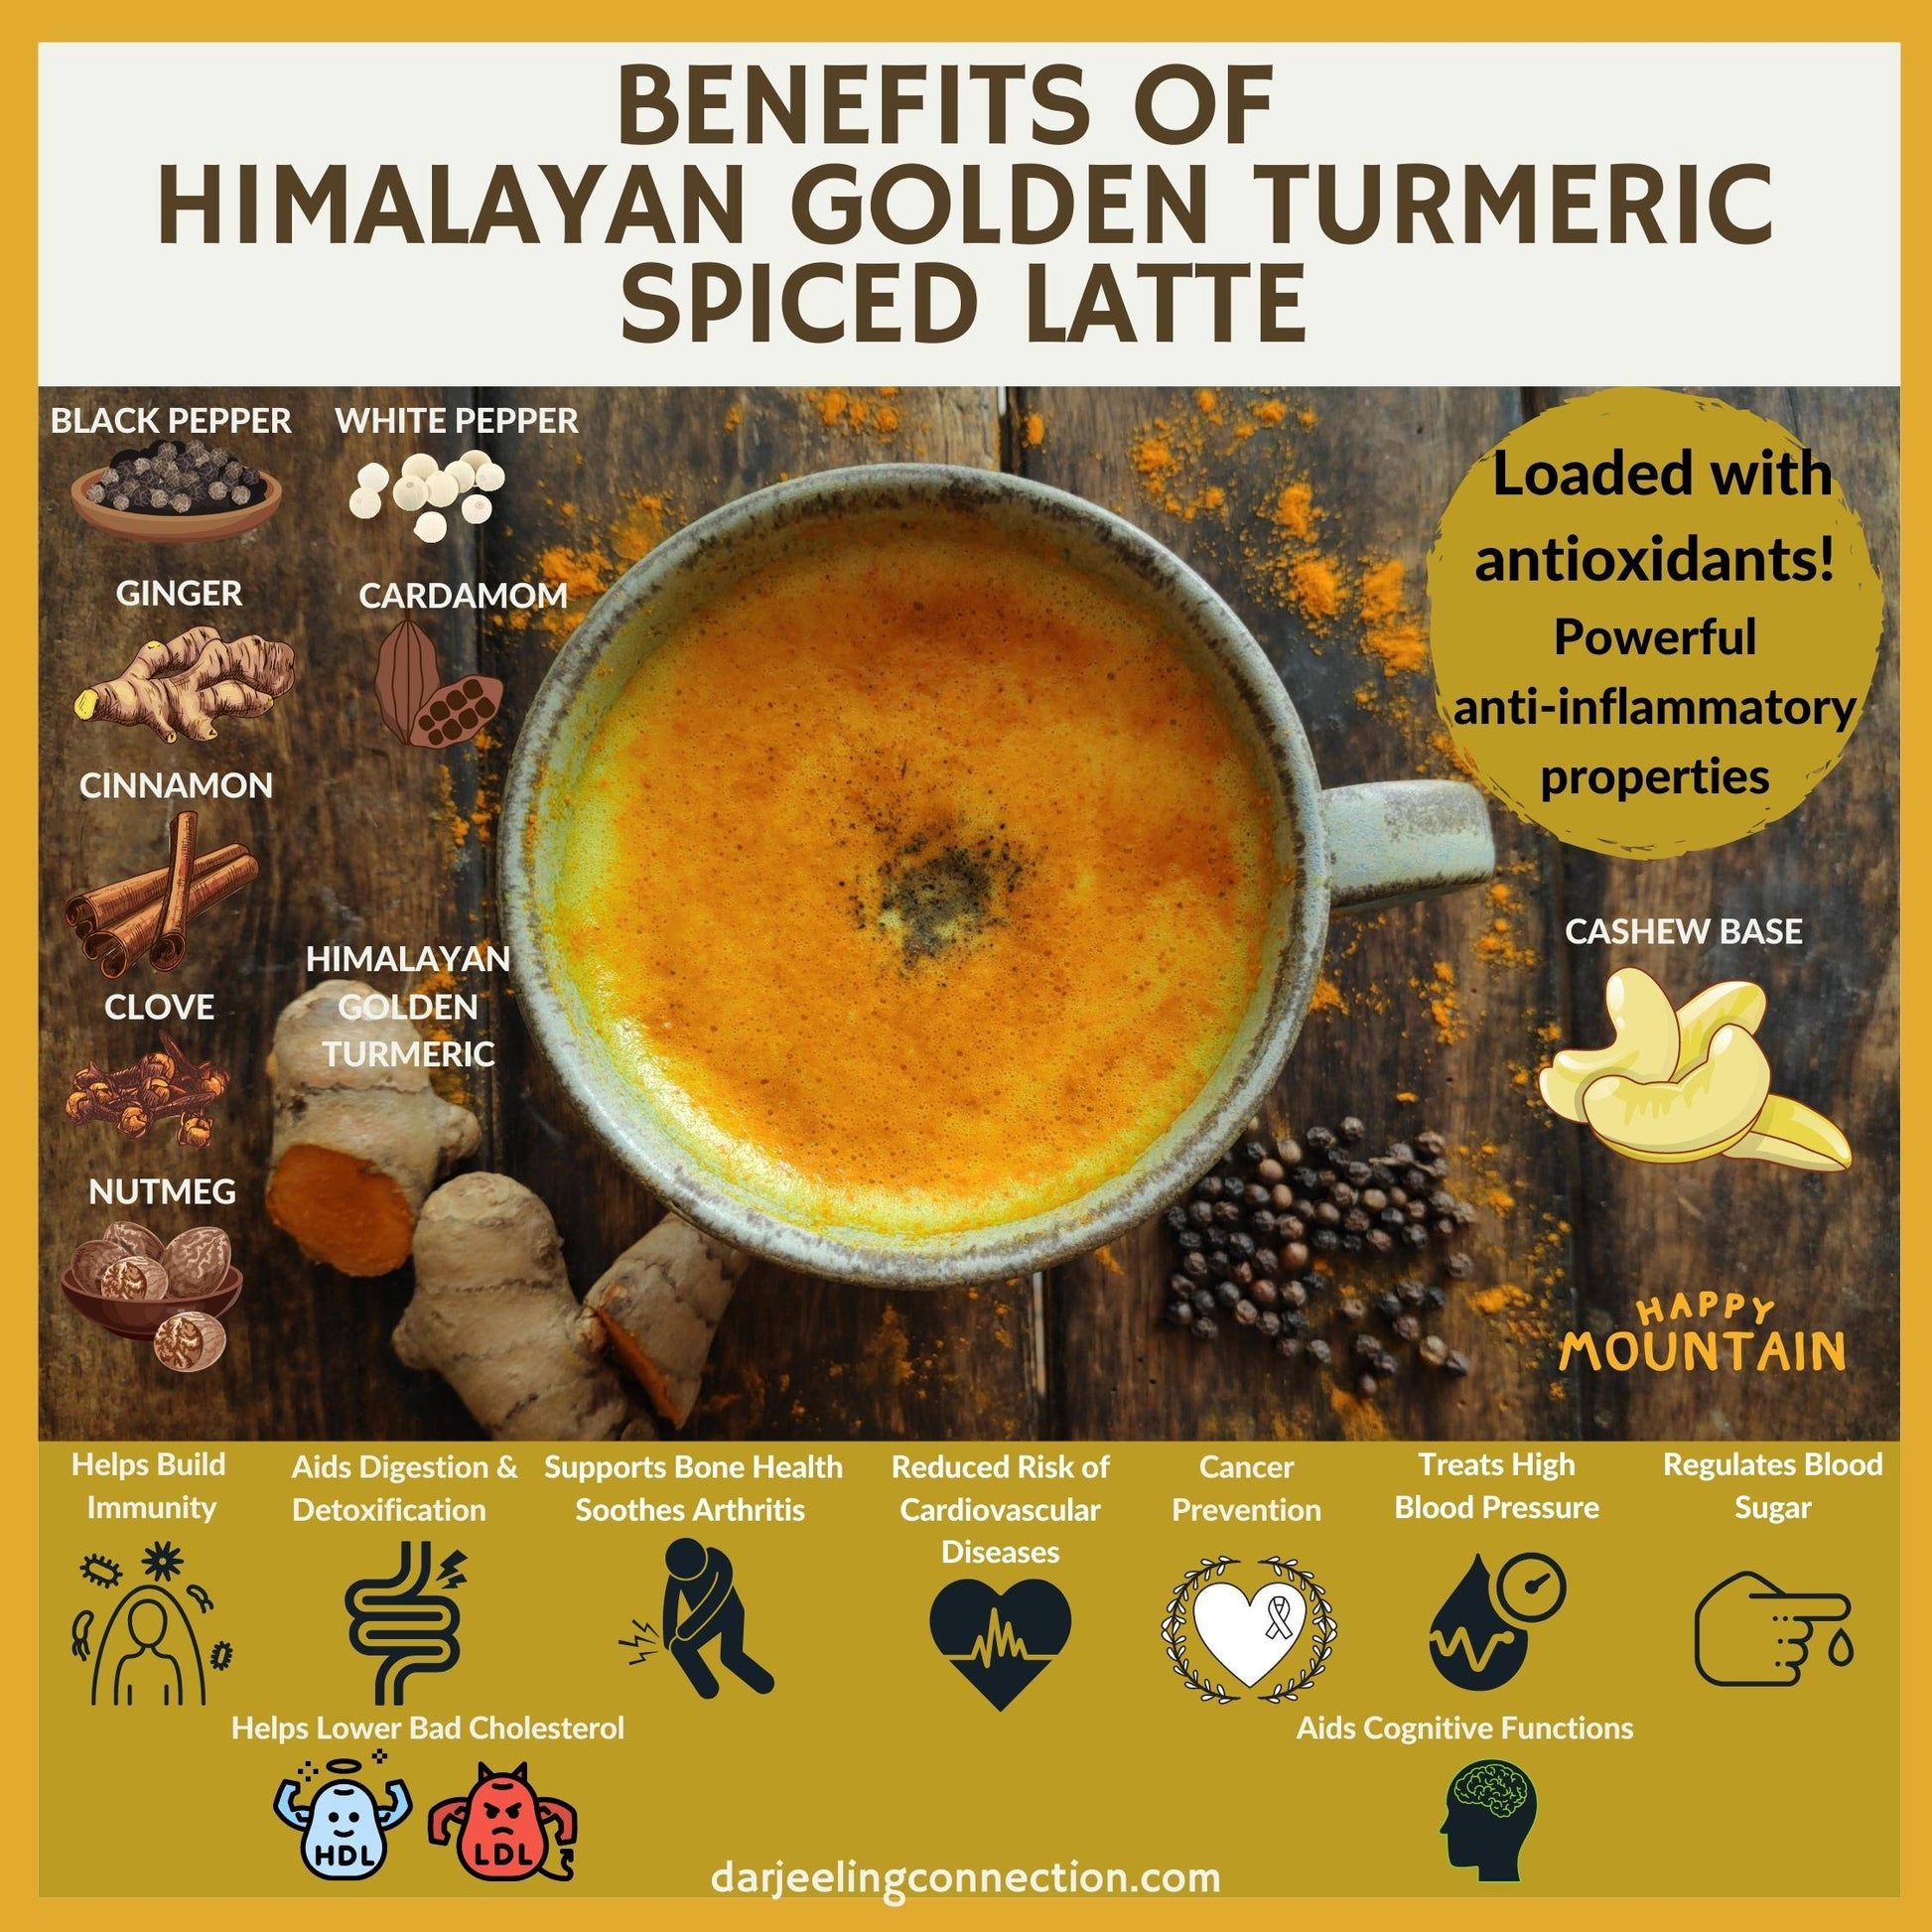 Benefits of Himalayan Golden Turmeric Spiced Latte - Darjeeling Connection